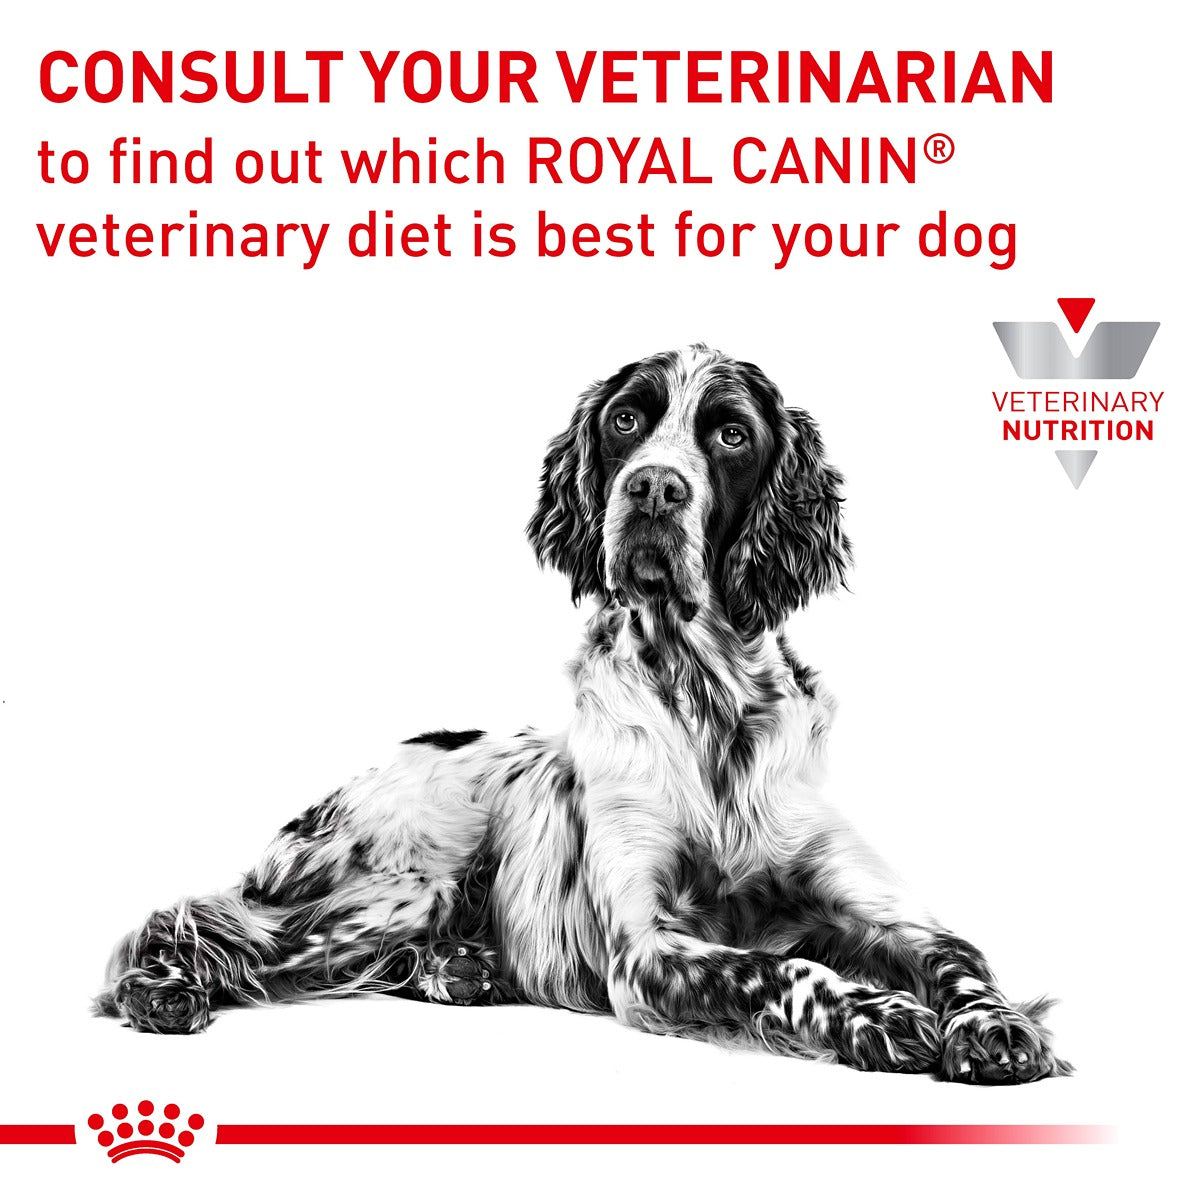 Royal Canin VET Hypoallergenic Dry Dog Food